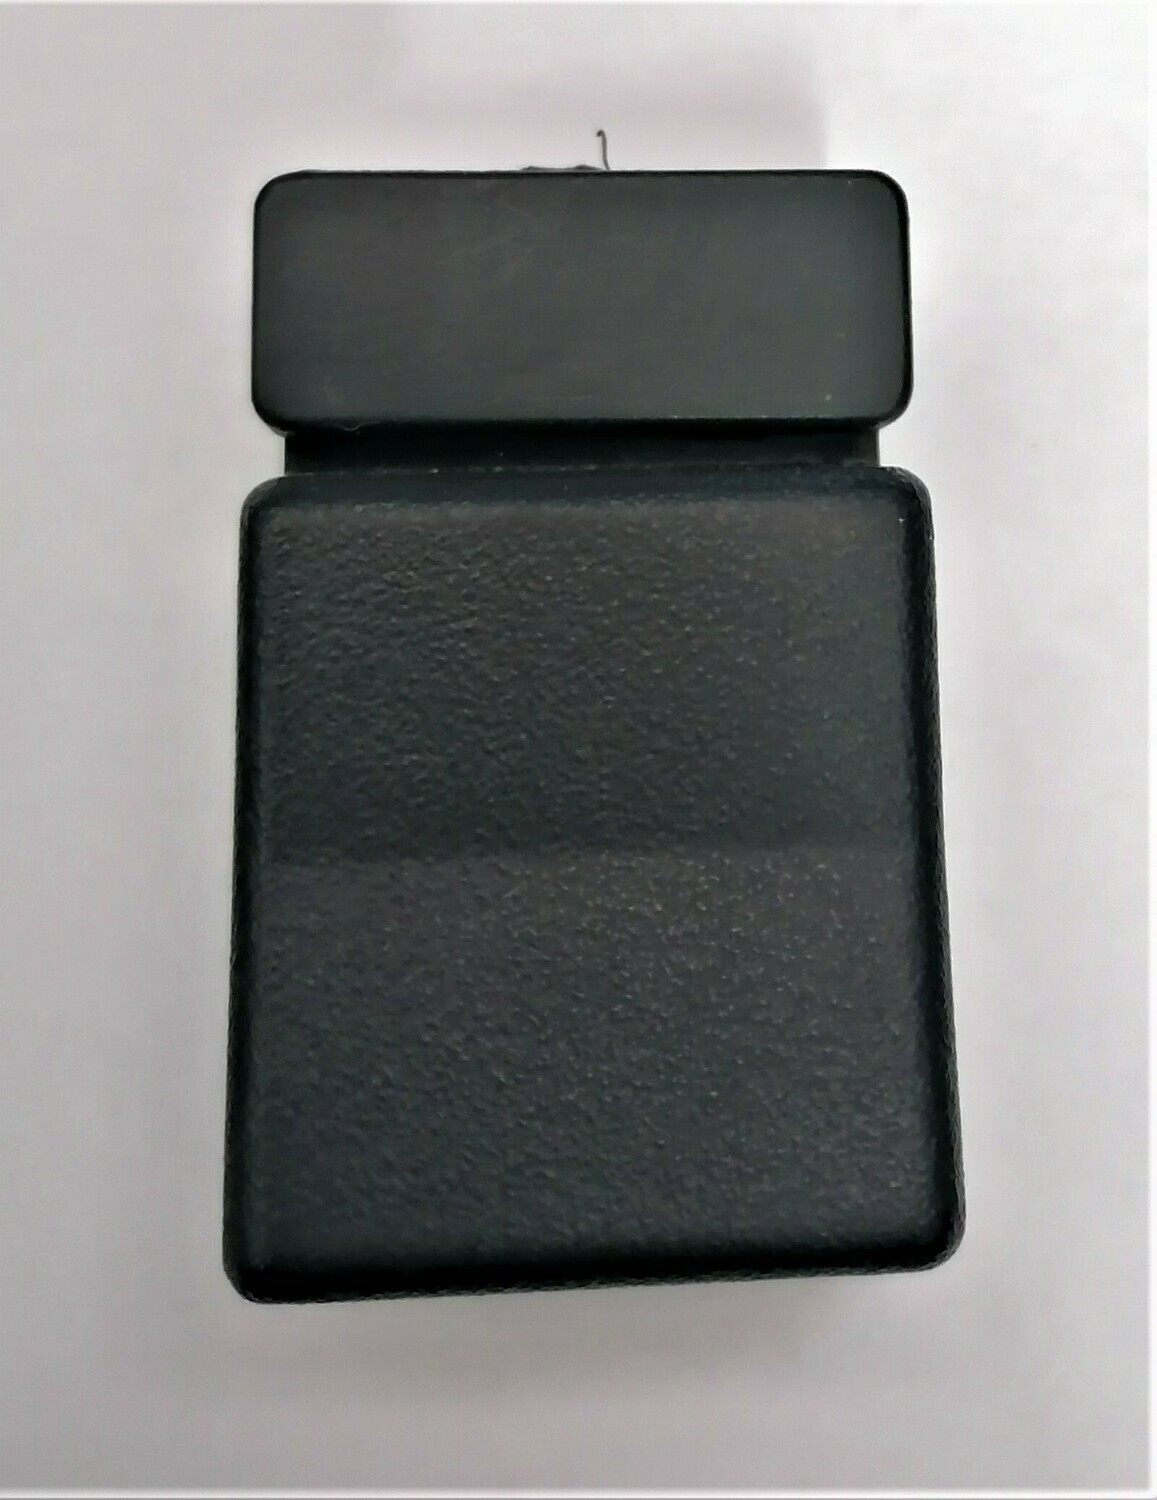 LOTUS ELAN M100 SE TURBO S2 DASHBOARD SWITCH BLANK Mint Condition GM 90229449 Very Rare